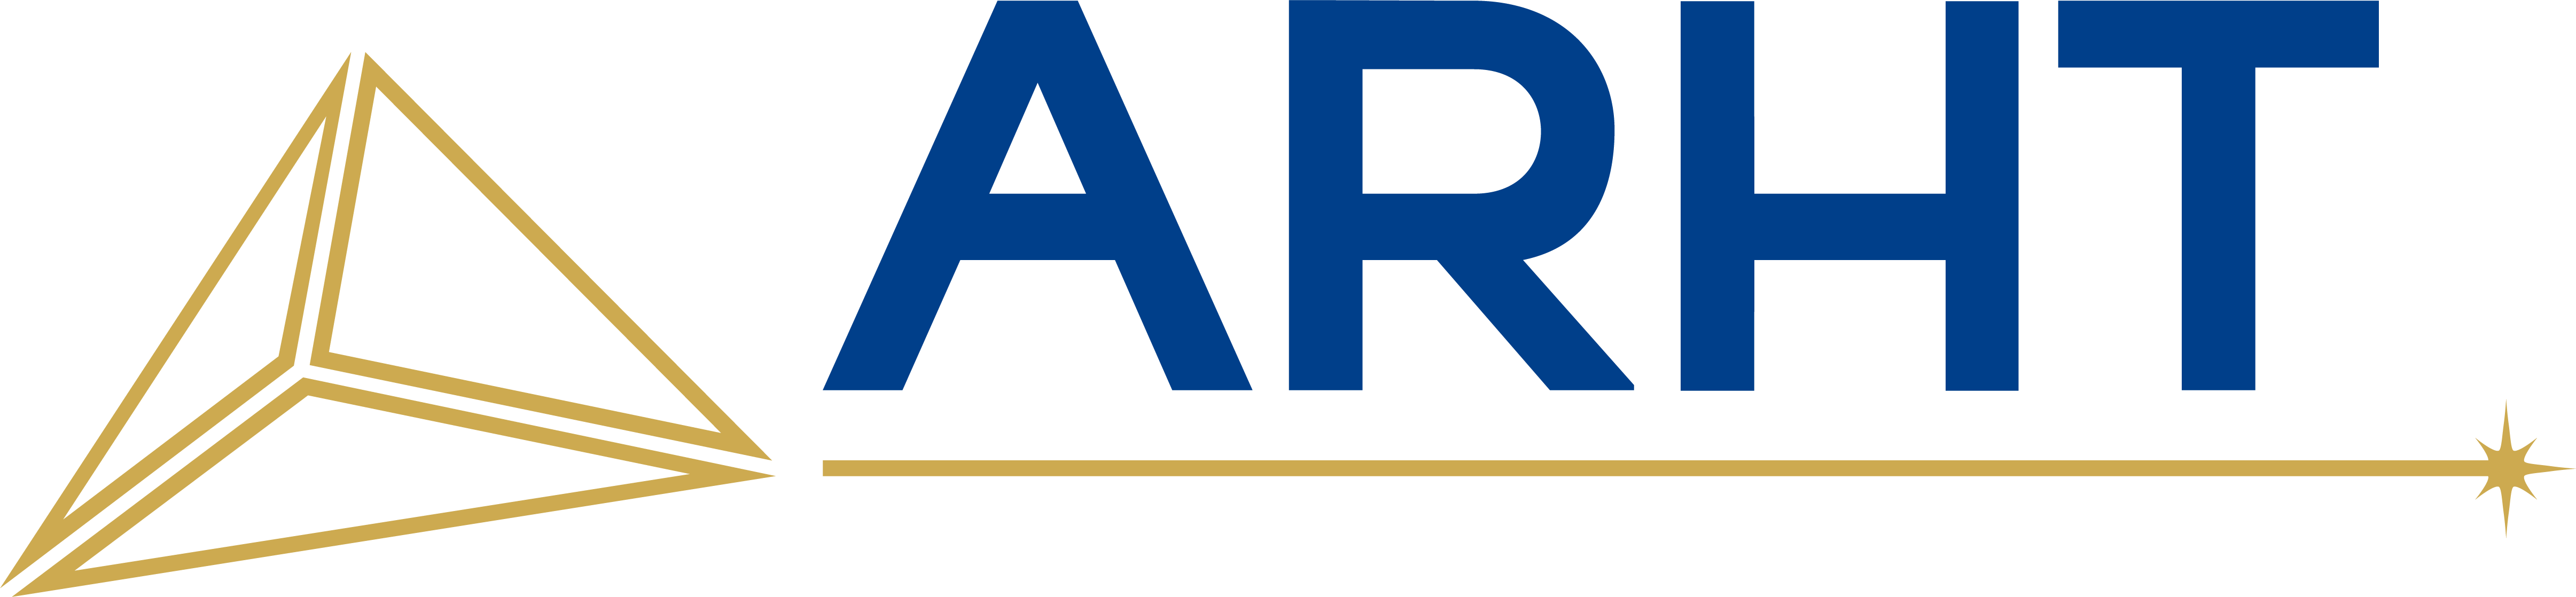 ARHT Logo 2023.png